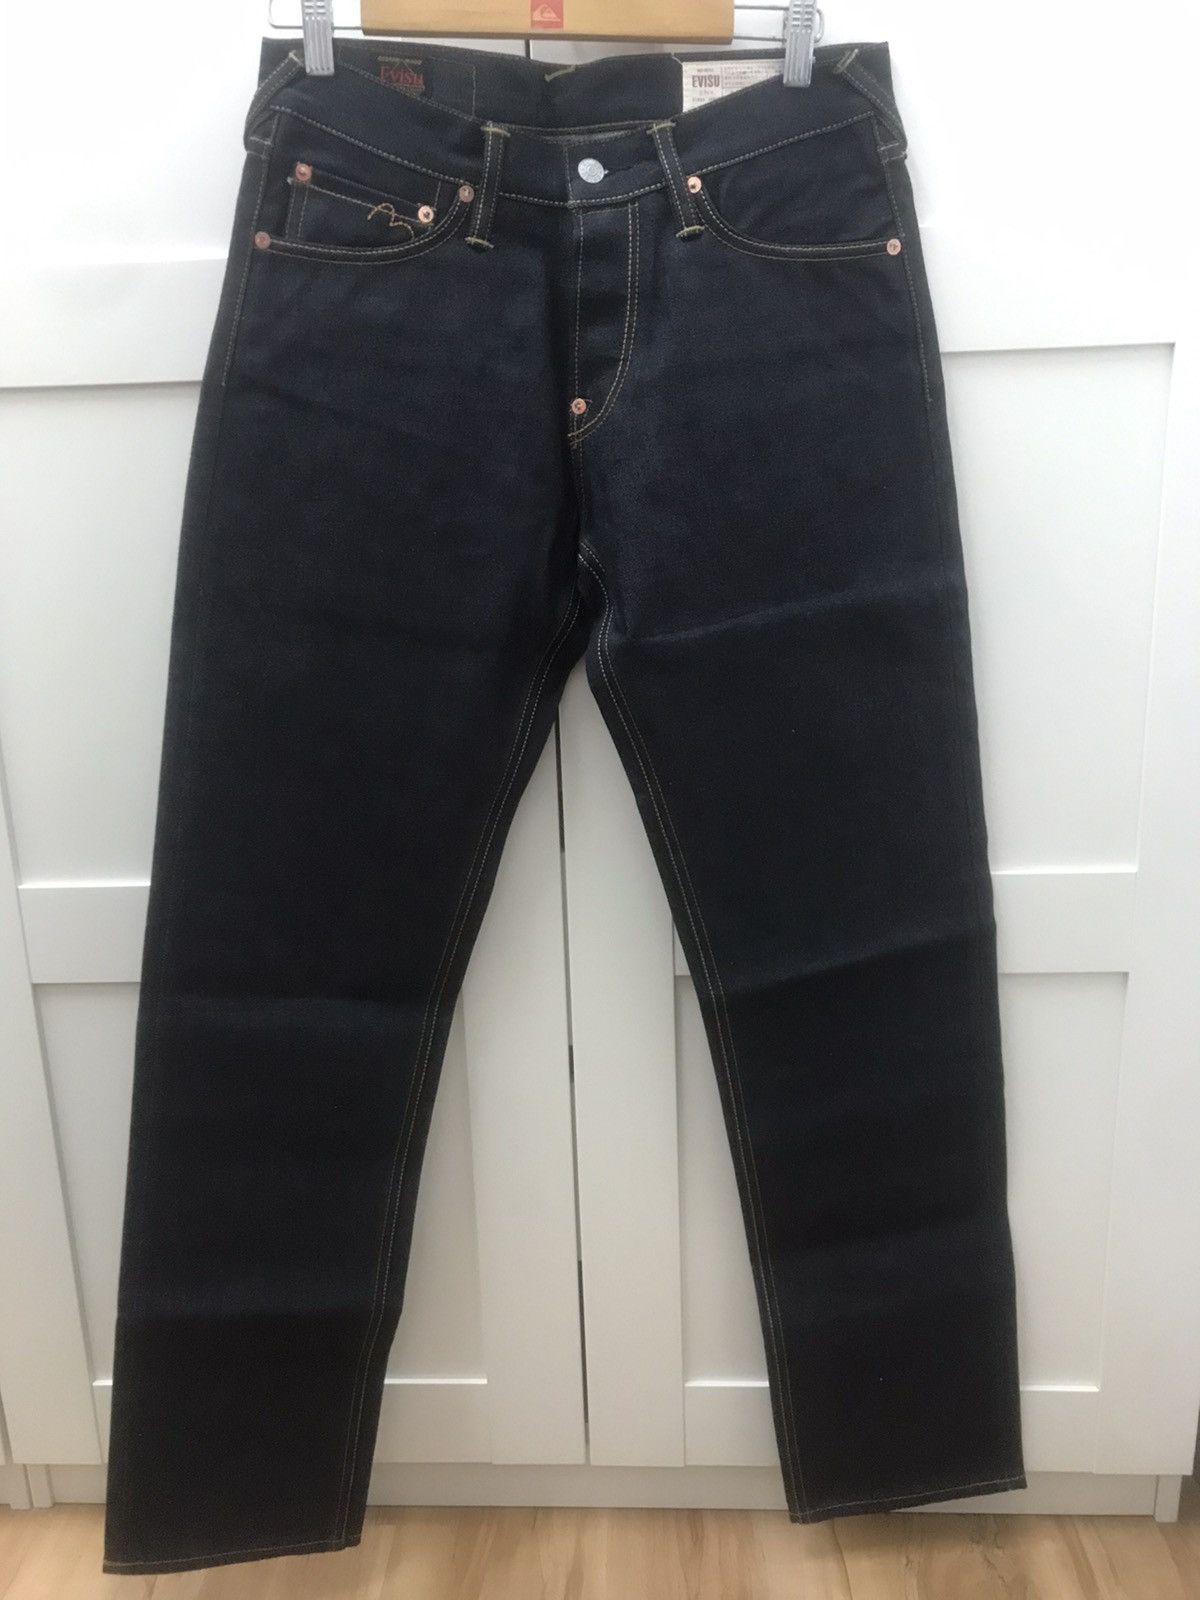 Evisu Limited edition evisu Jeans Size US 30 / EU 46 - 6 Thumbnail